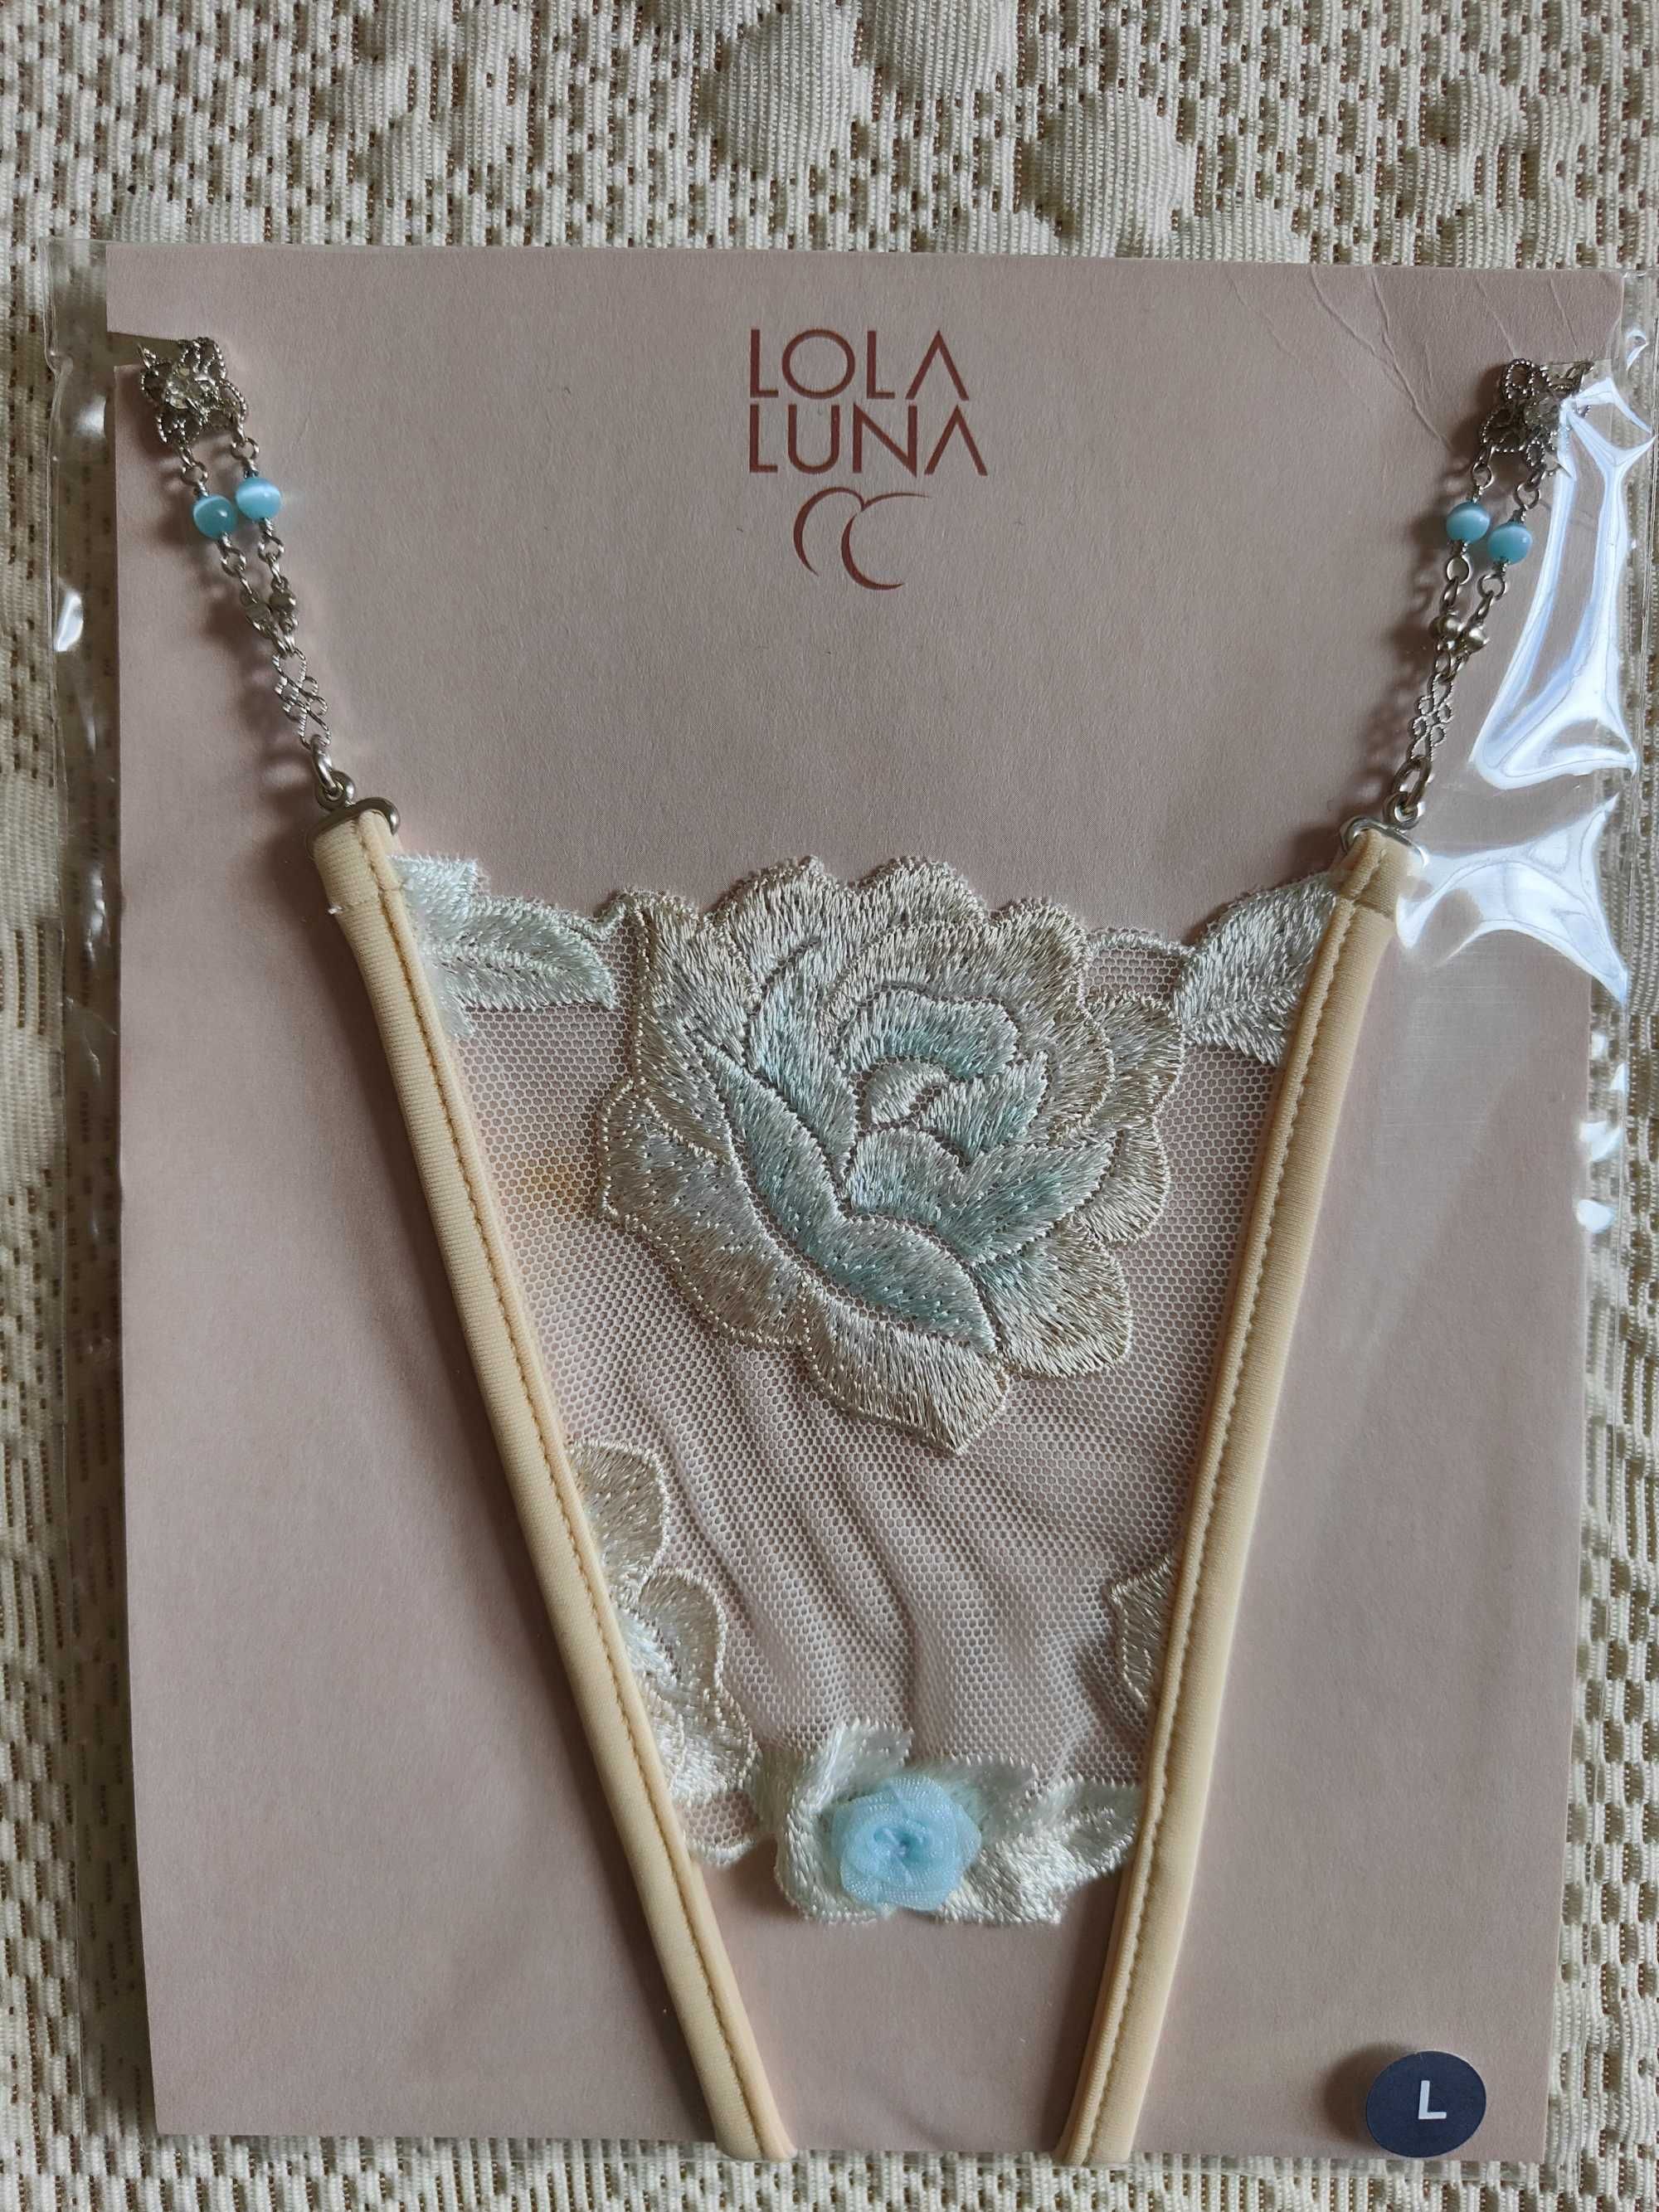 Lingerie da marca conceituada "Lola Luna"